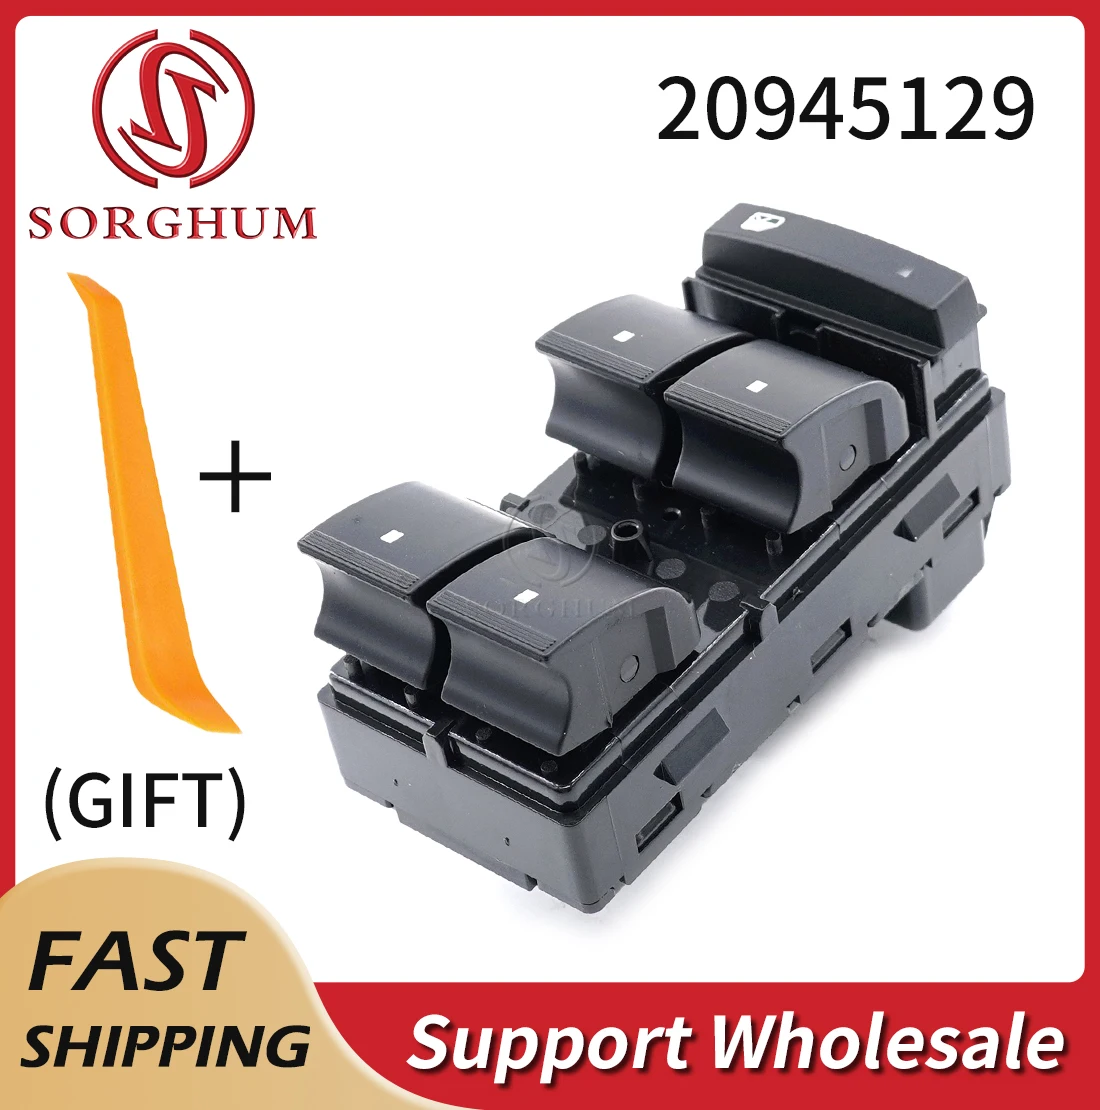 

Sorghum 20945129 Power Window Switch For Chevrolet Silverado GMC Sierra 1500 2500HD Traverse HHR Buick Enclave 22883768 15804093